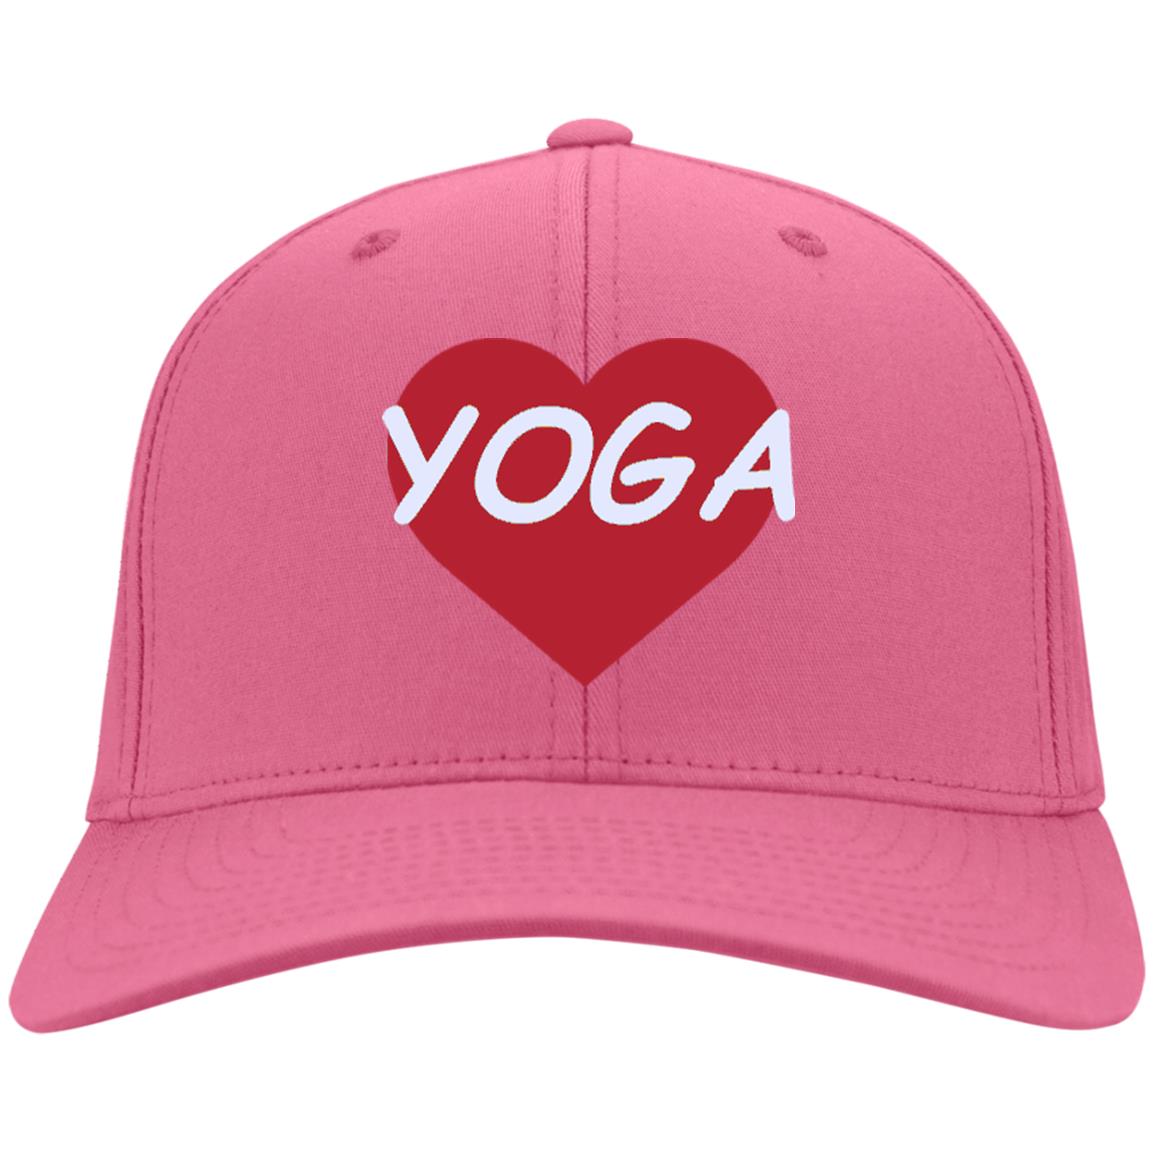 Yoga Sport Hat